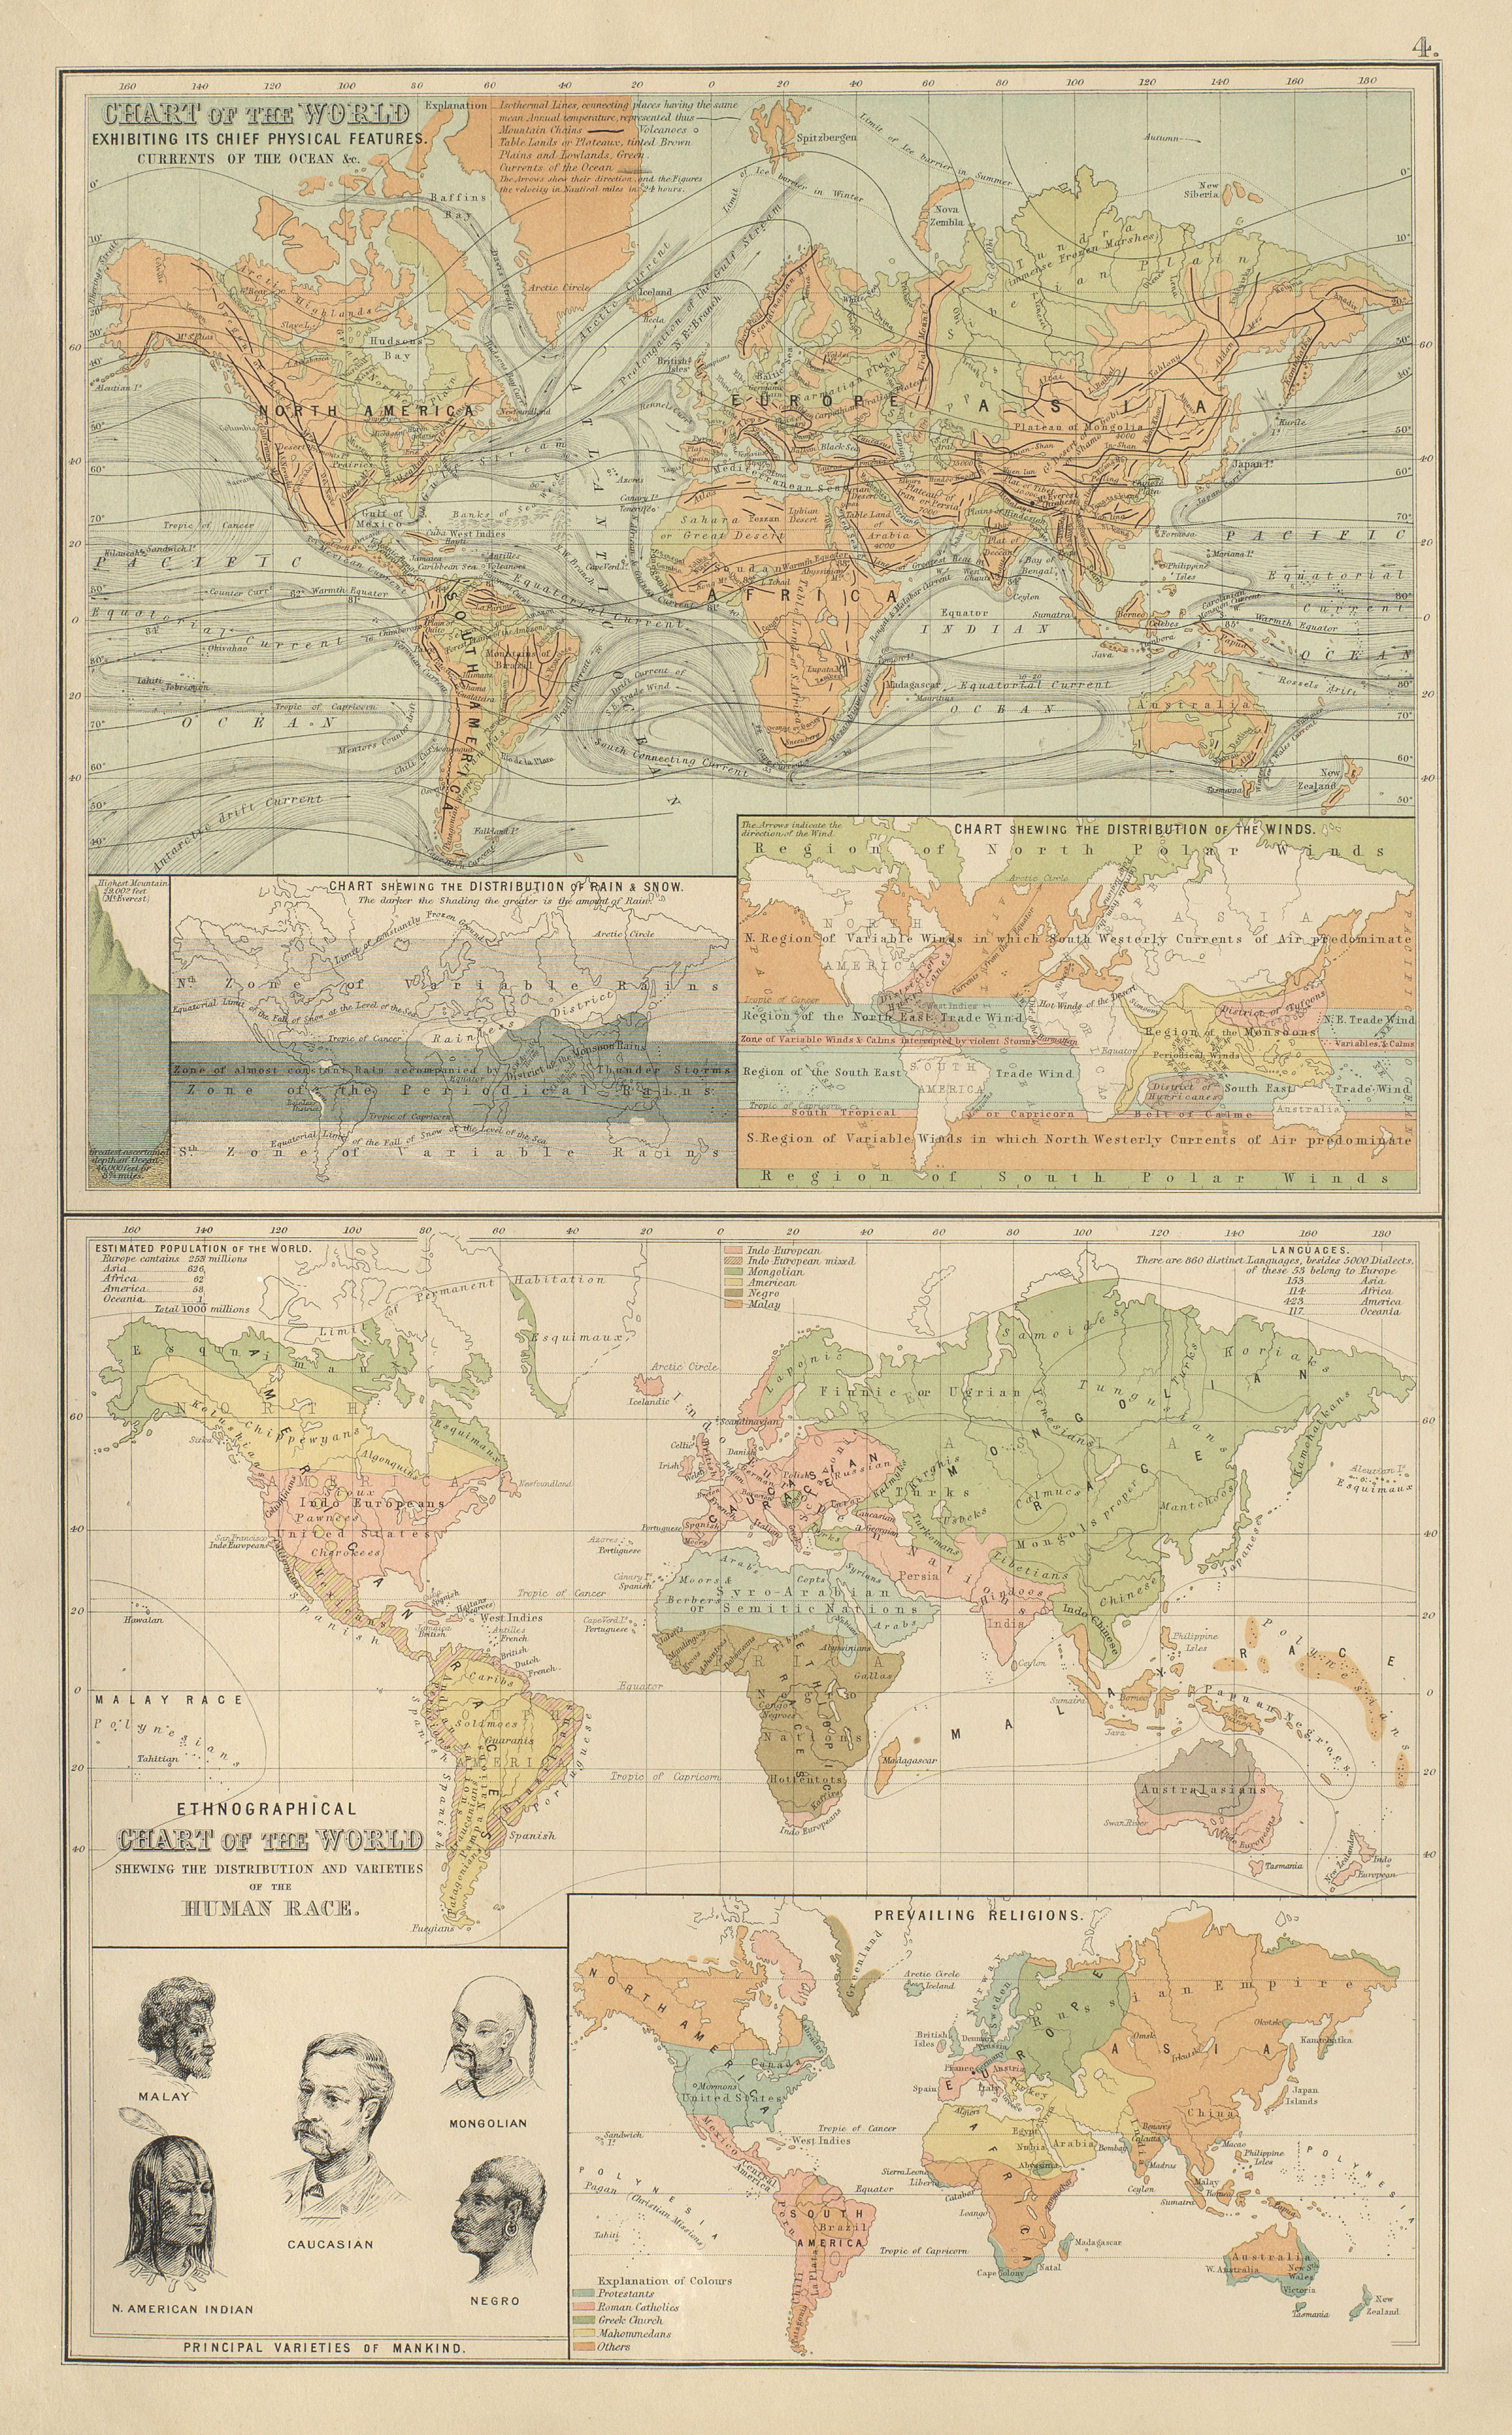 Associate Product Physical & Ethnographical Charts of the World. Ethnic. BARTHOLOMEW 1898 map